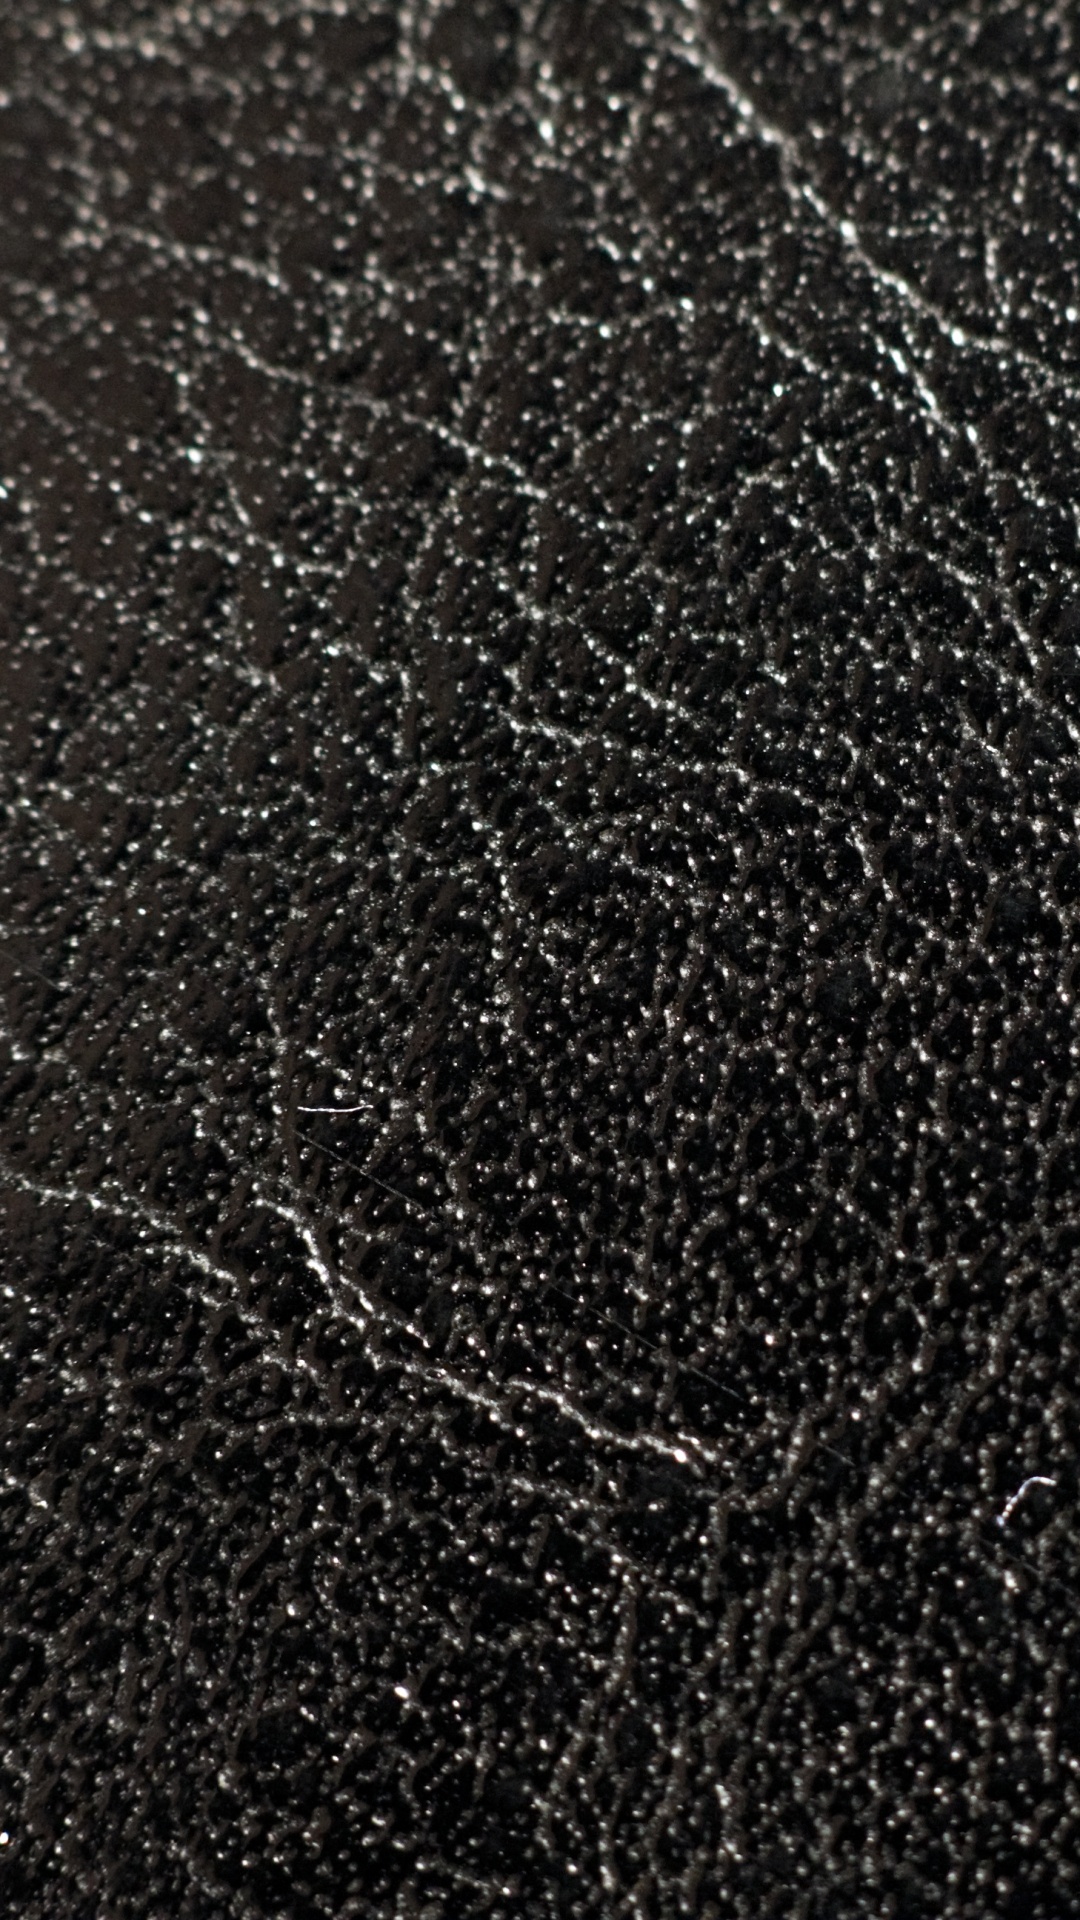 Textile en Cuir Noir en Gros Plan. Wallpaper in 1080x1920 Resolution